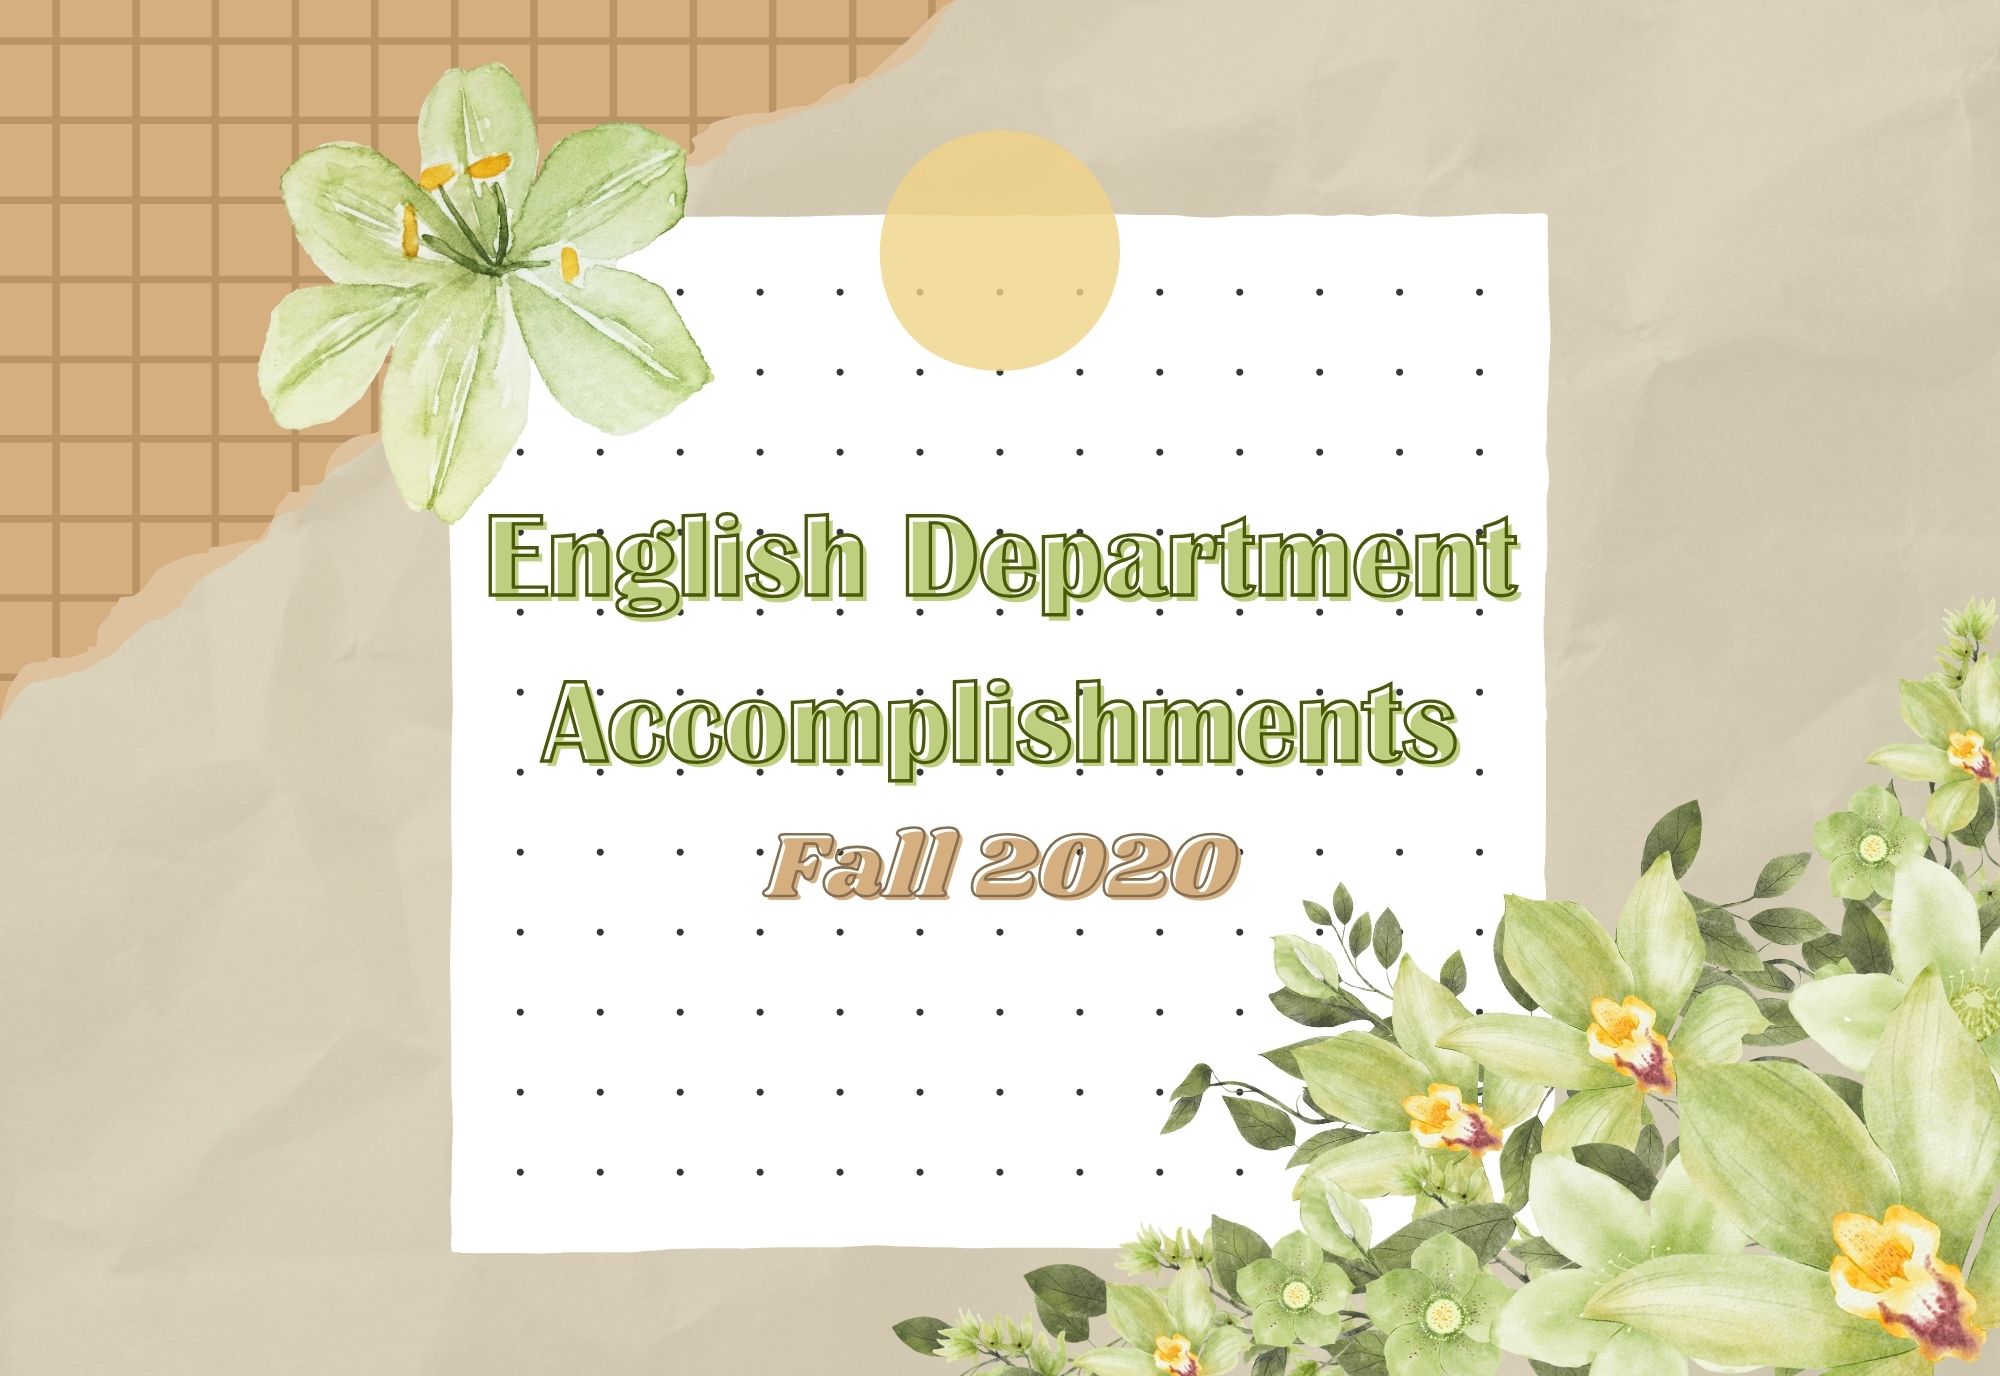 Fall 2020 English Department Accomplishments